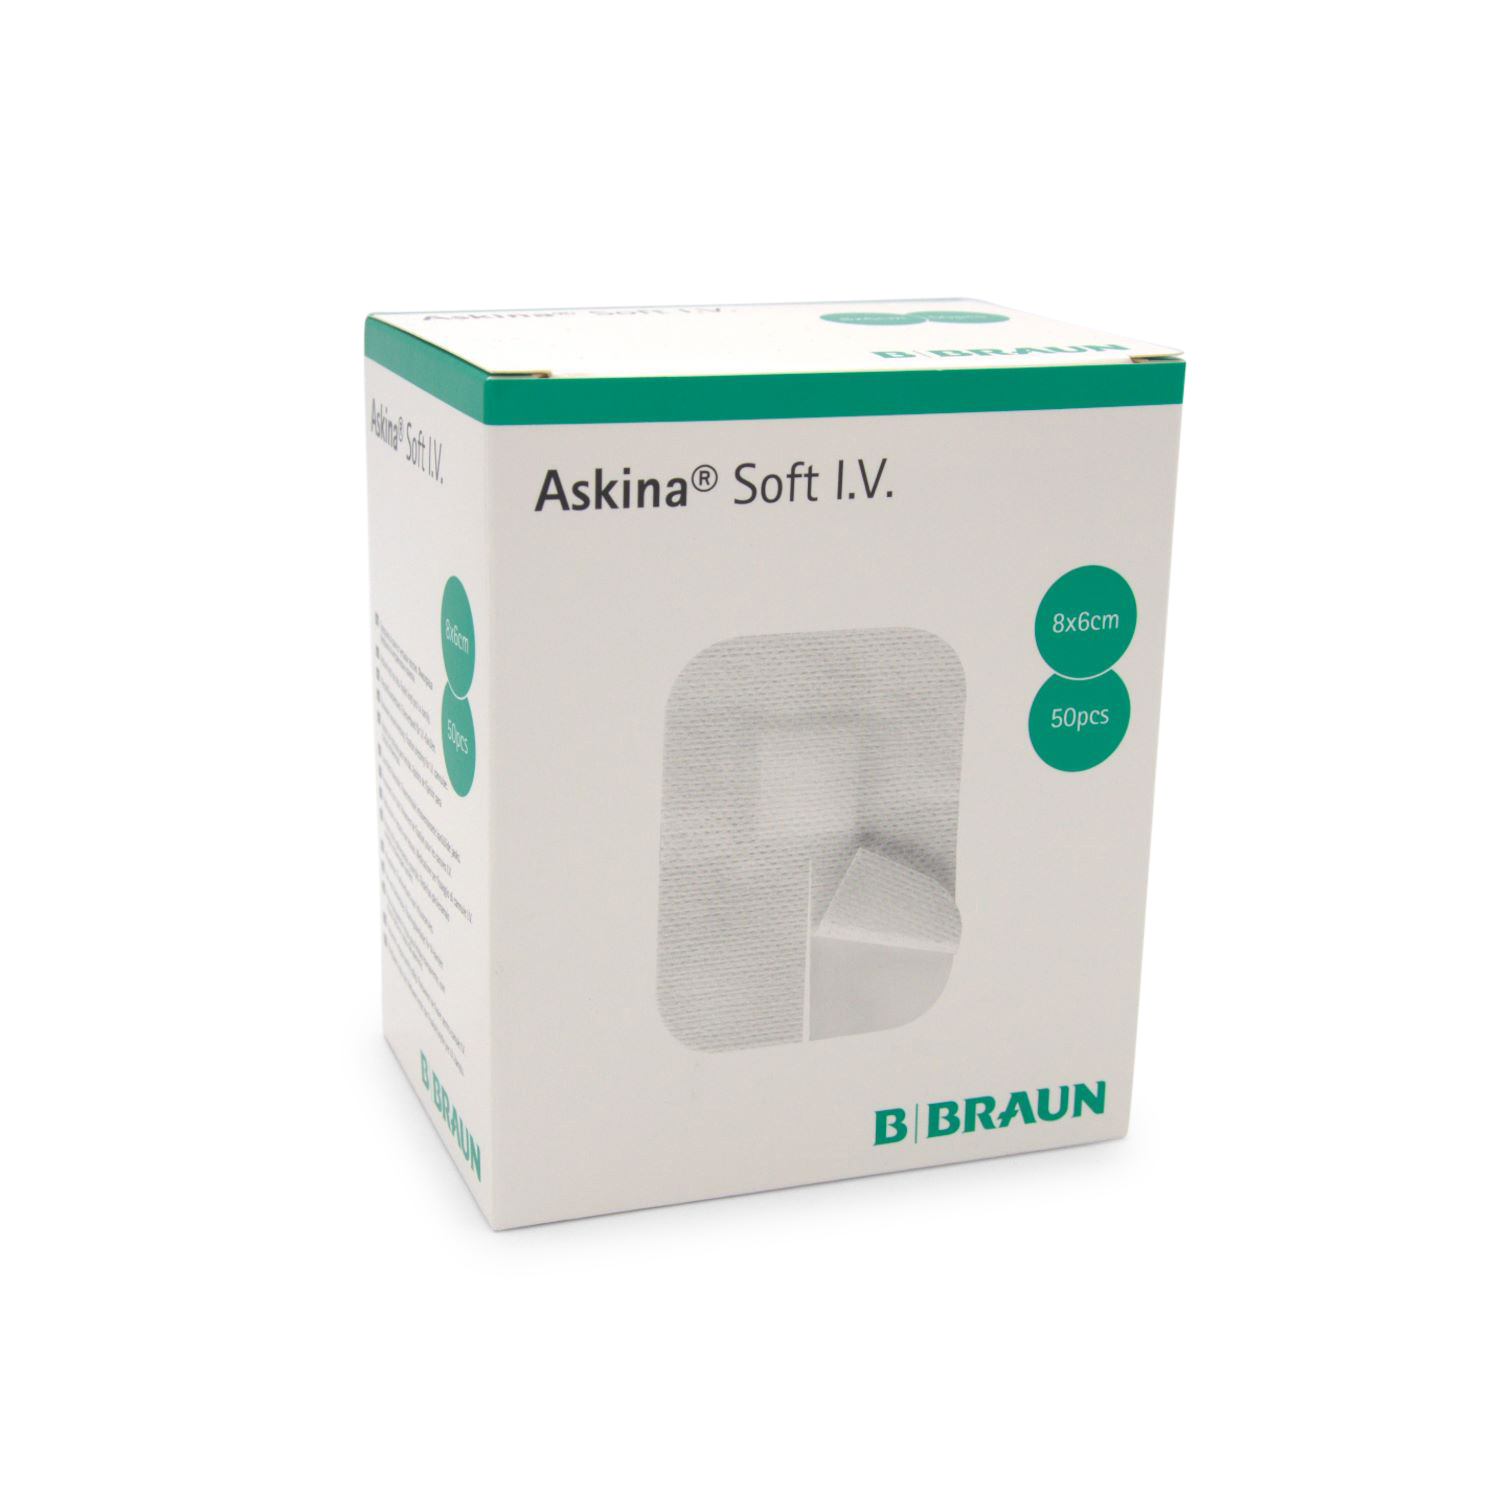 Askina® Soft I.V. Fixierverband (8 x 6 cm, steril)